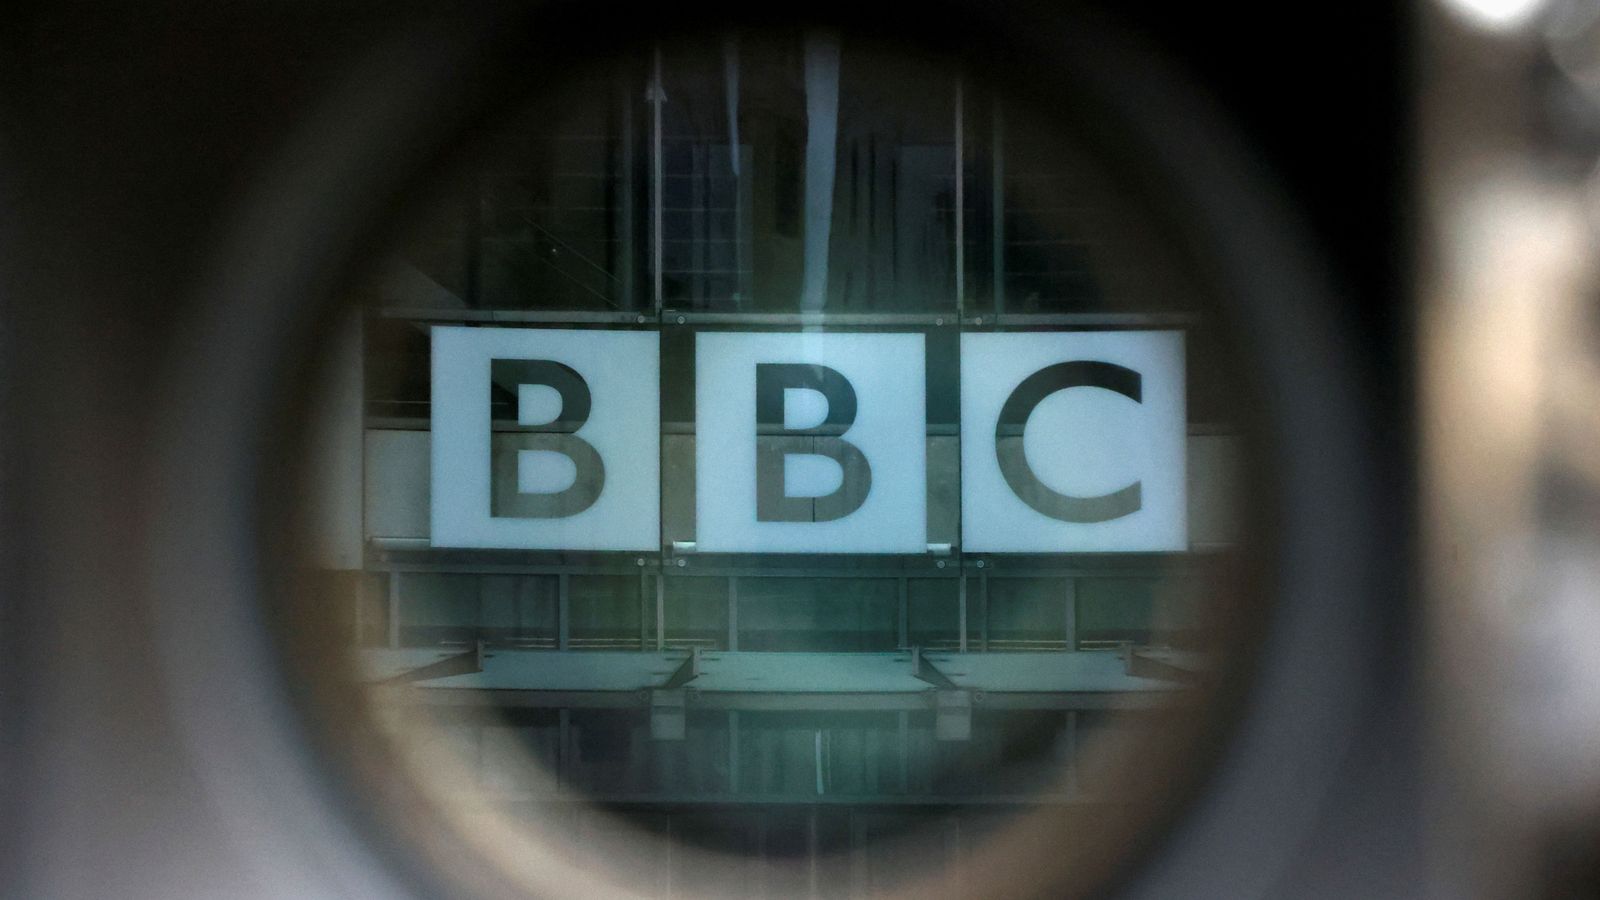 BBC presenter scandal: Fresh allegations made against suspended celebrity